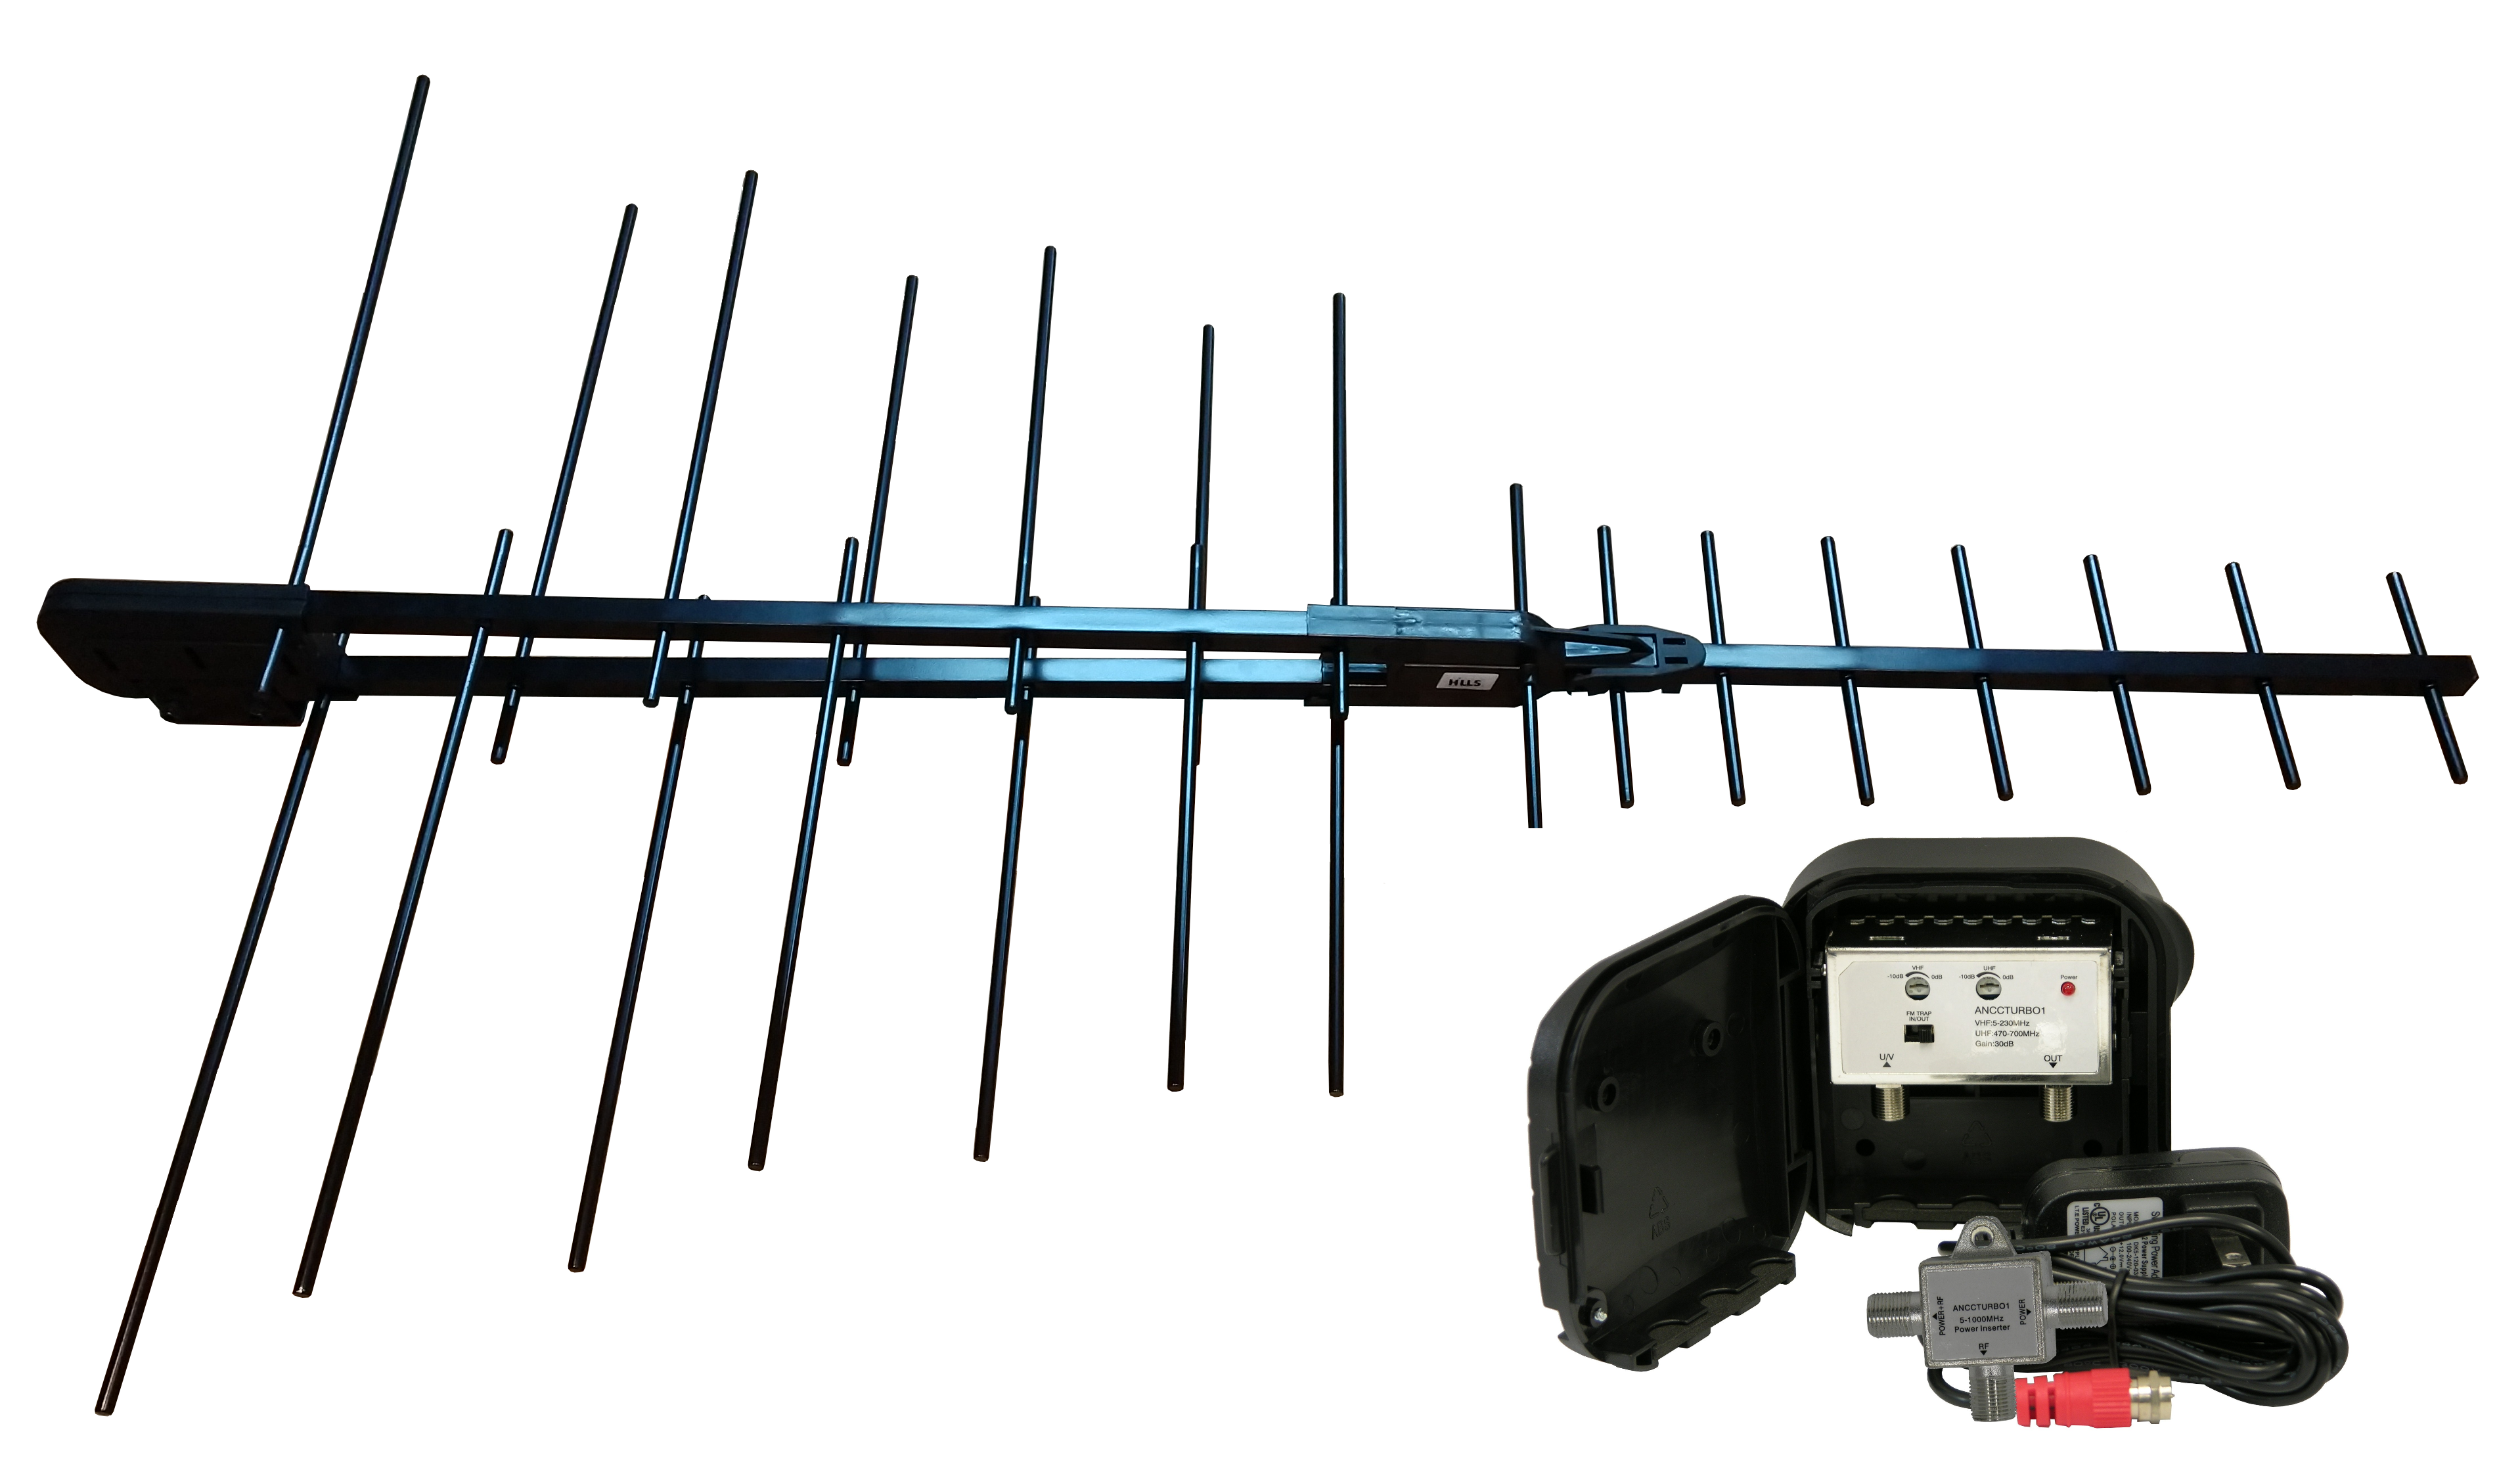 Ness Electronics, Inc, Sky Blue BA200, Black Arrow Antenna Hi-VHF/UHF bundled with SB51 Single Input Preamp